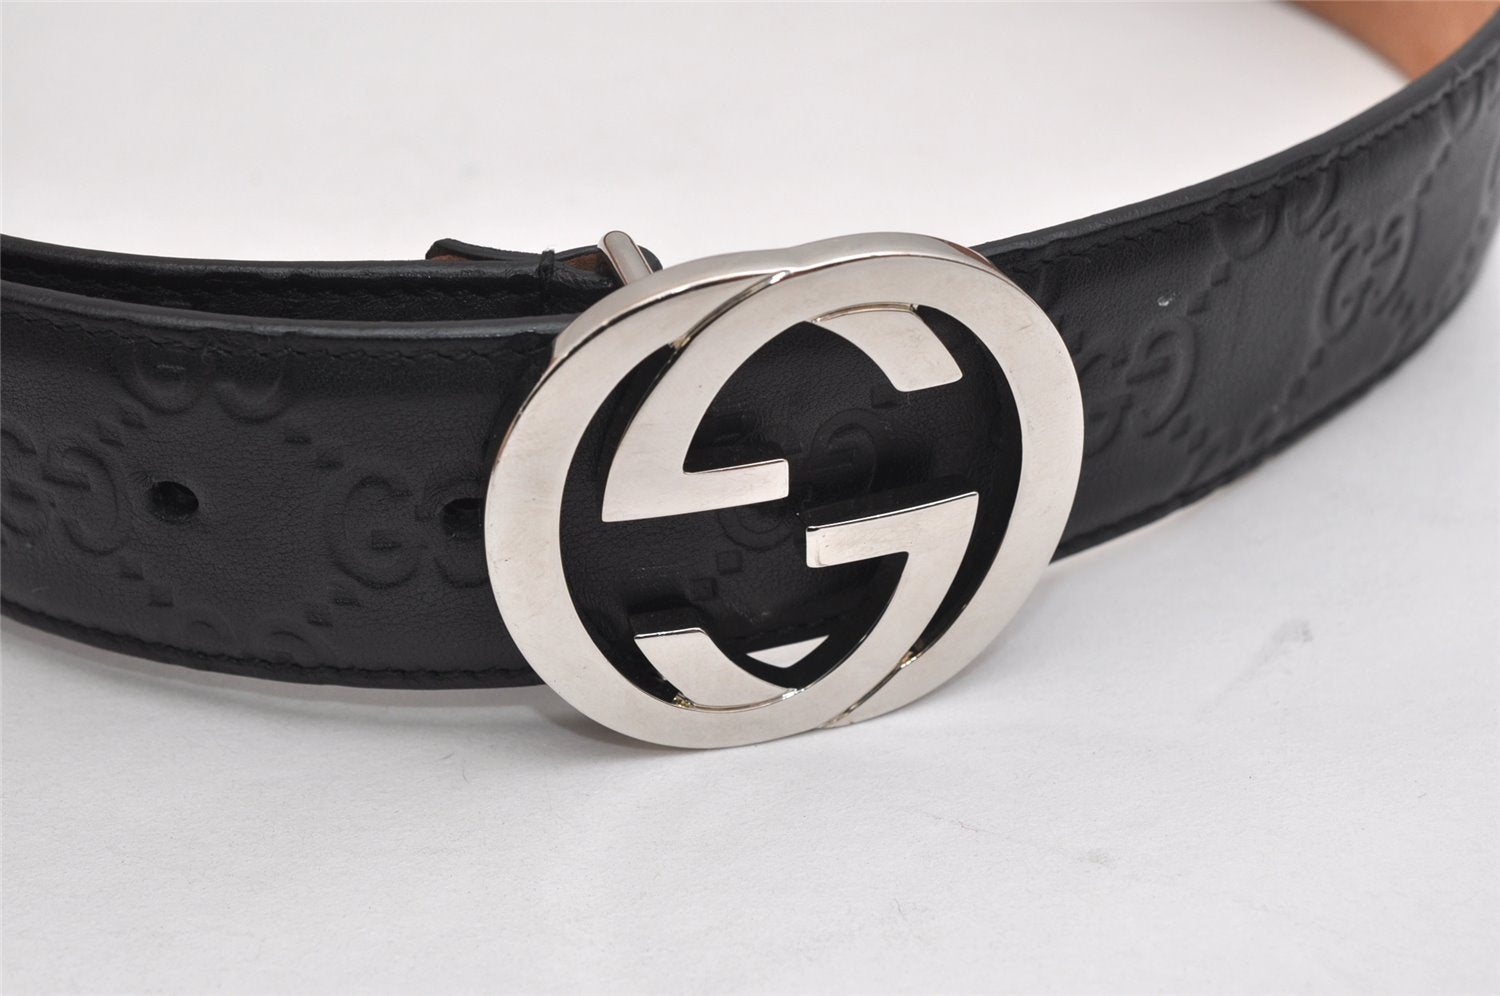 Auth GUCCI Guccissima Interlocking Belt GG Leather 80cm 31.5